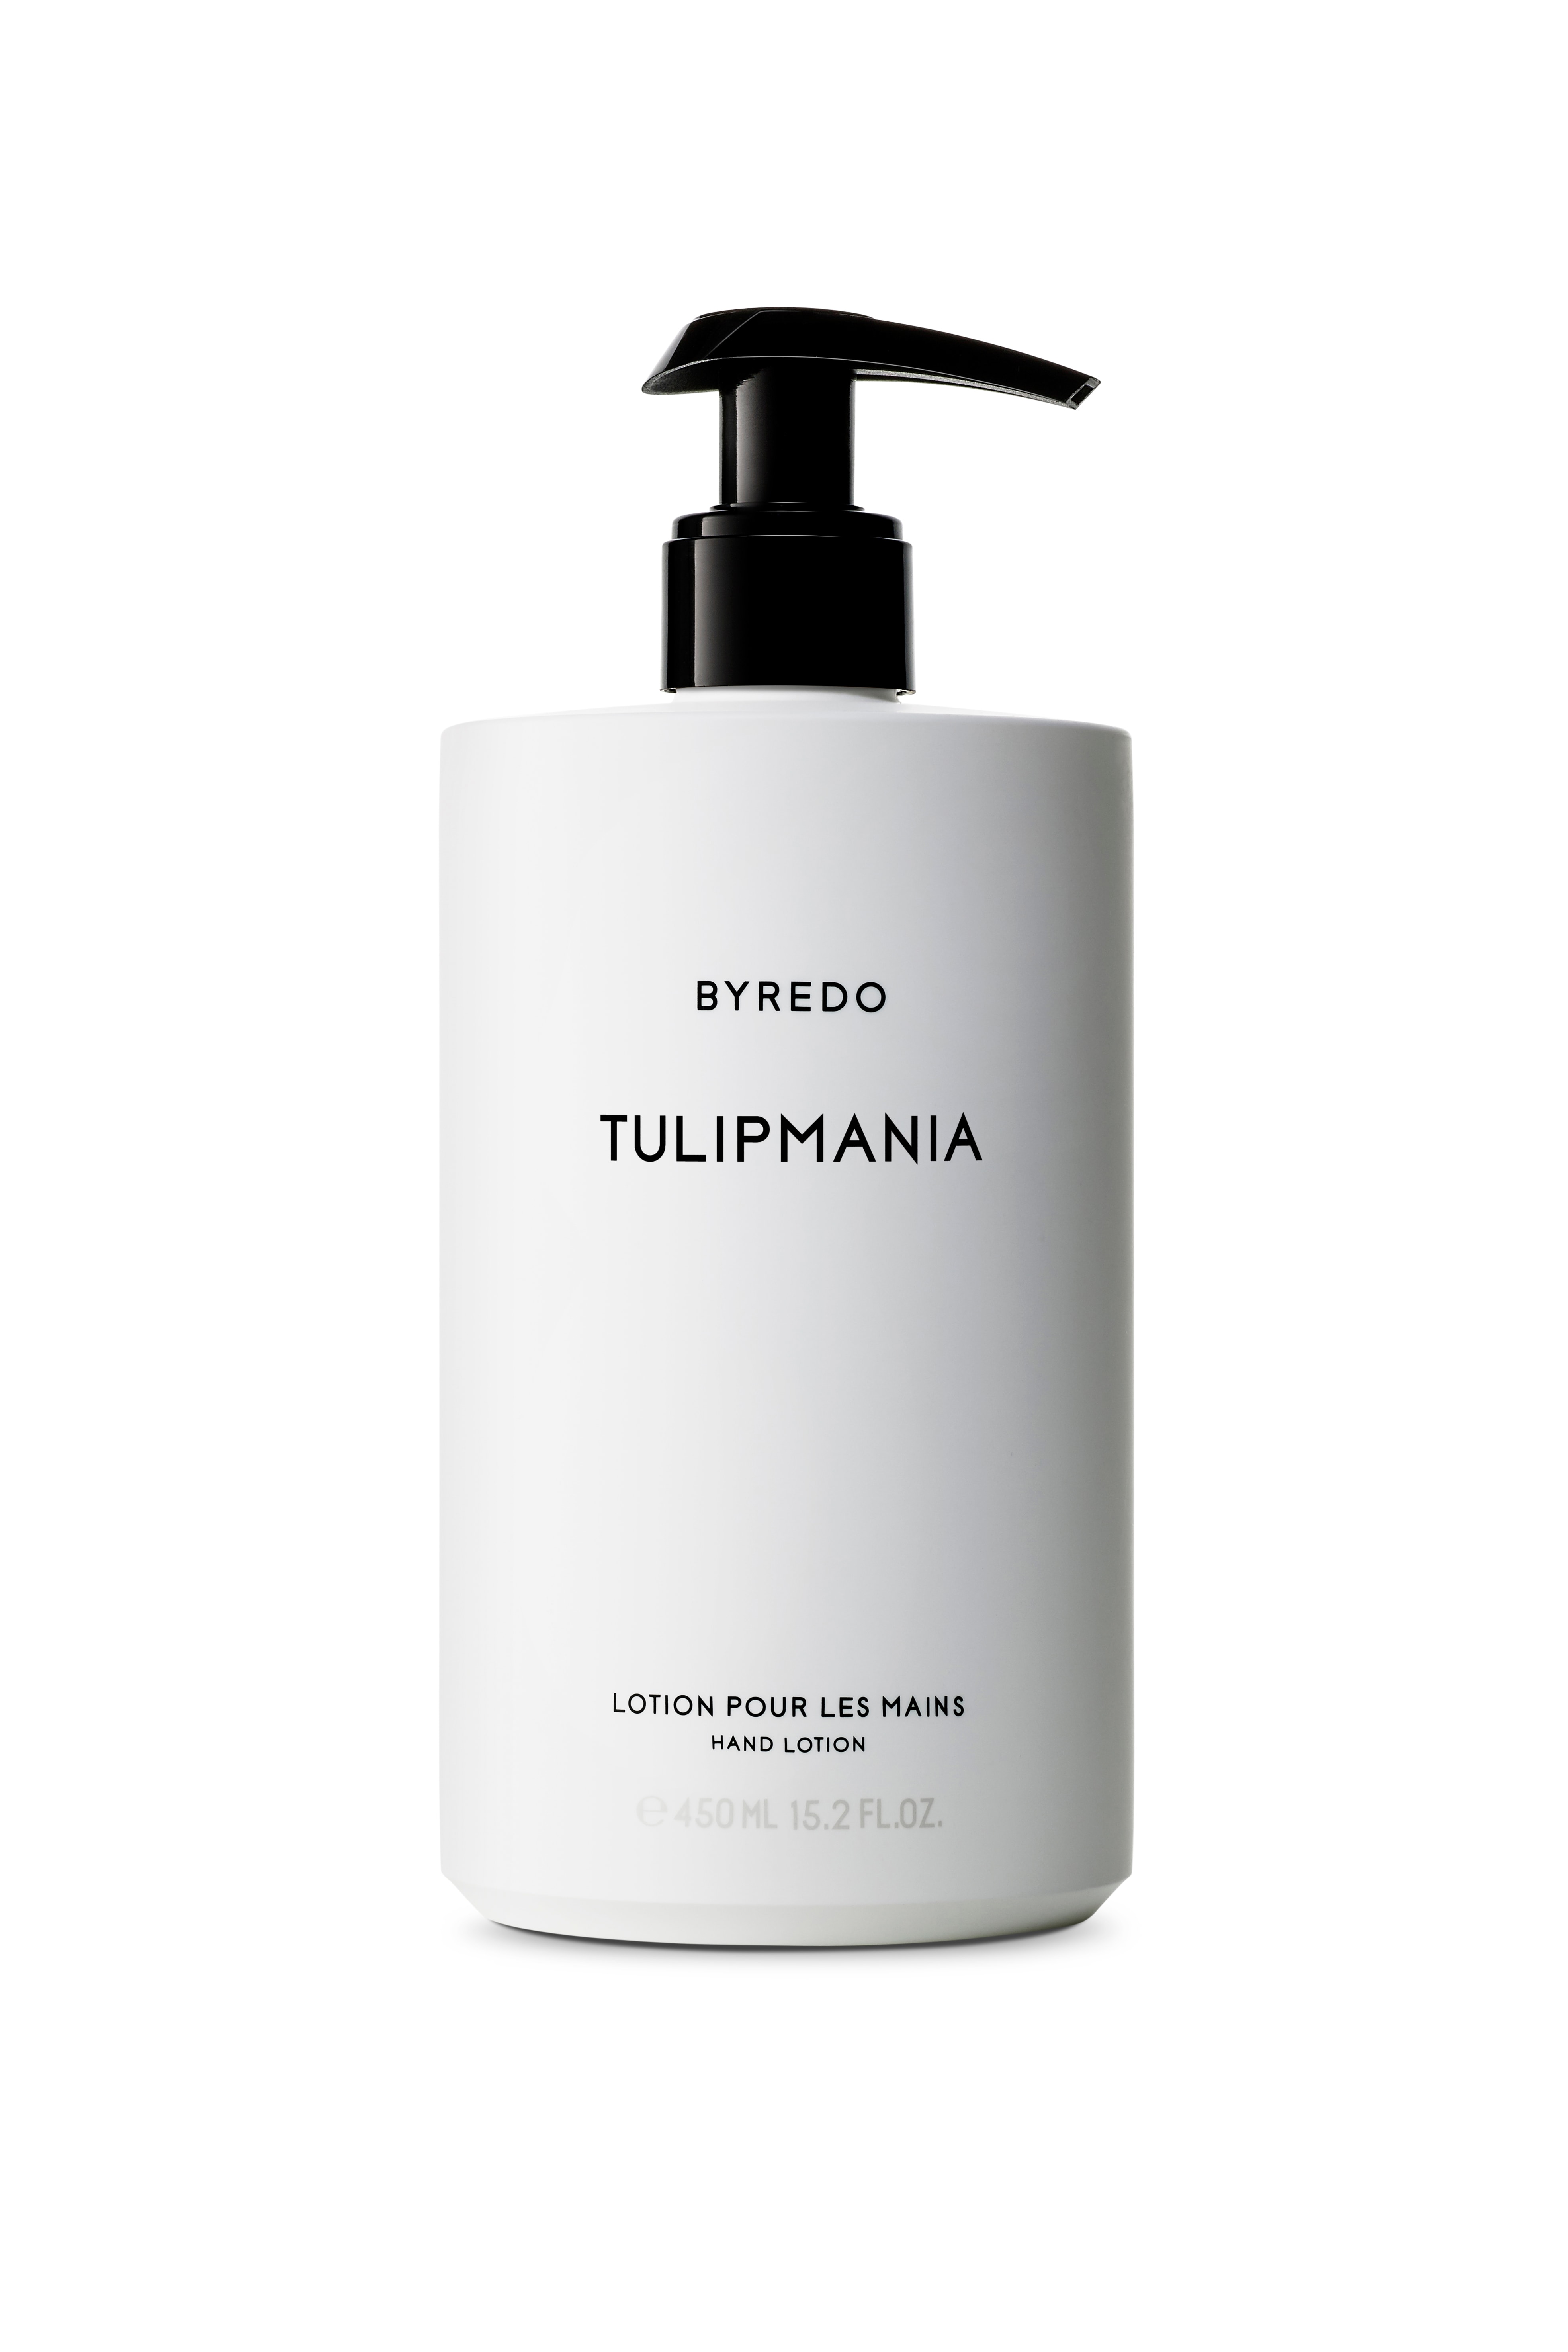 Byredo Tulipmania Hand Care Beauty Collection Soap Rinse Free Hand Wash Cream Moisturizer 